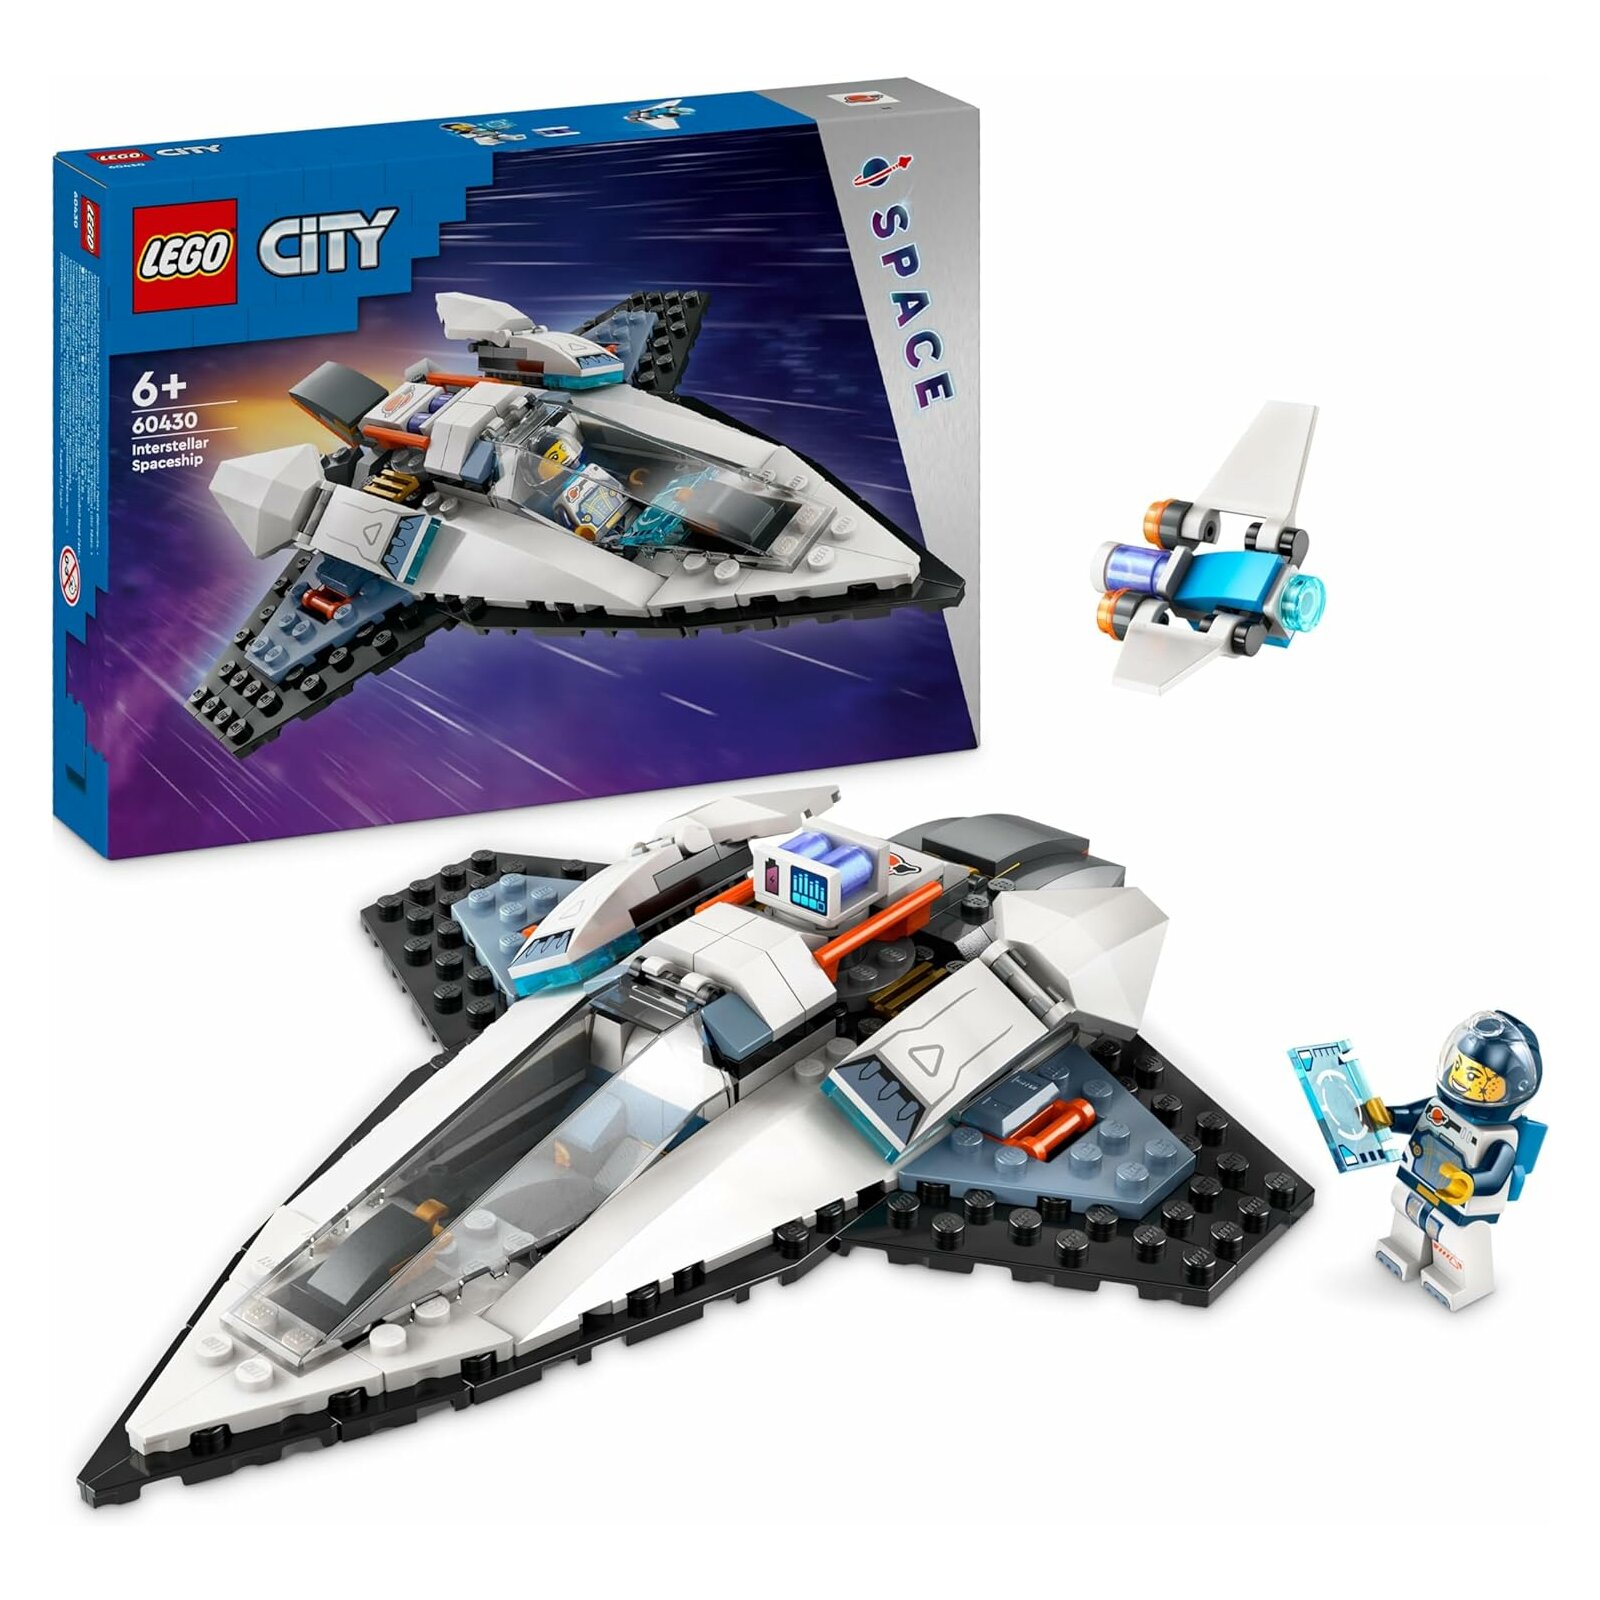 LEGO - City - 60430 Raumschiff